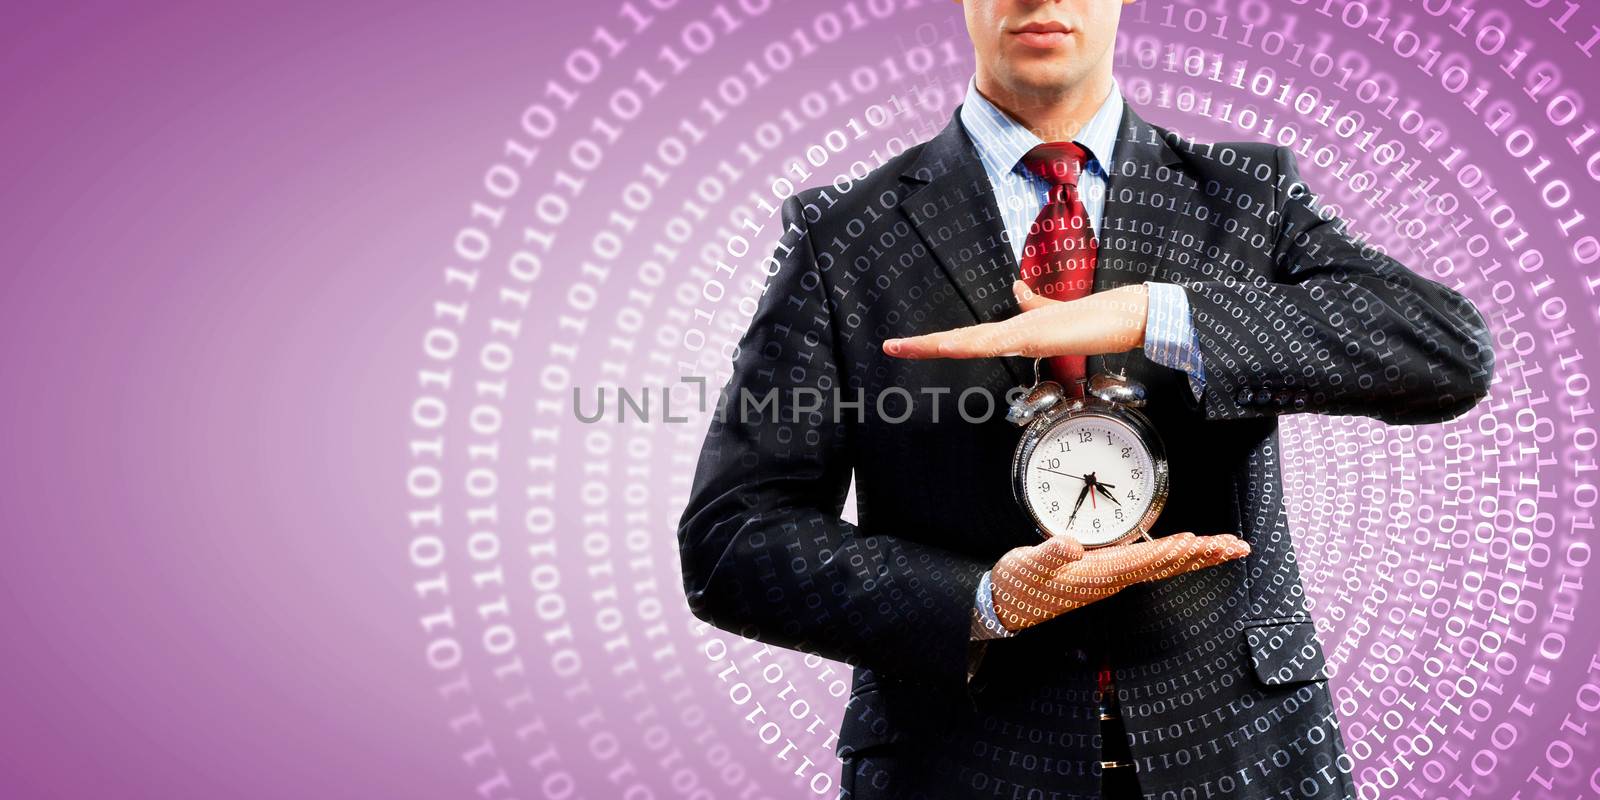 Image of businessman holding alarmclock against illustration background